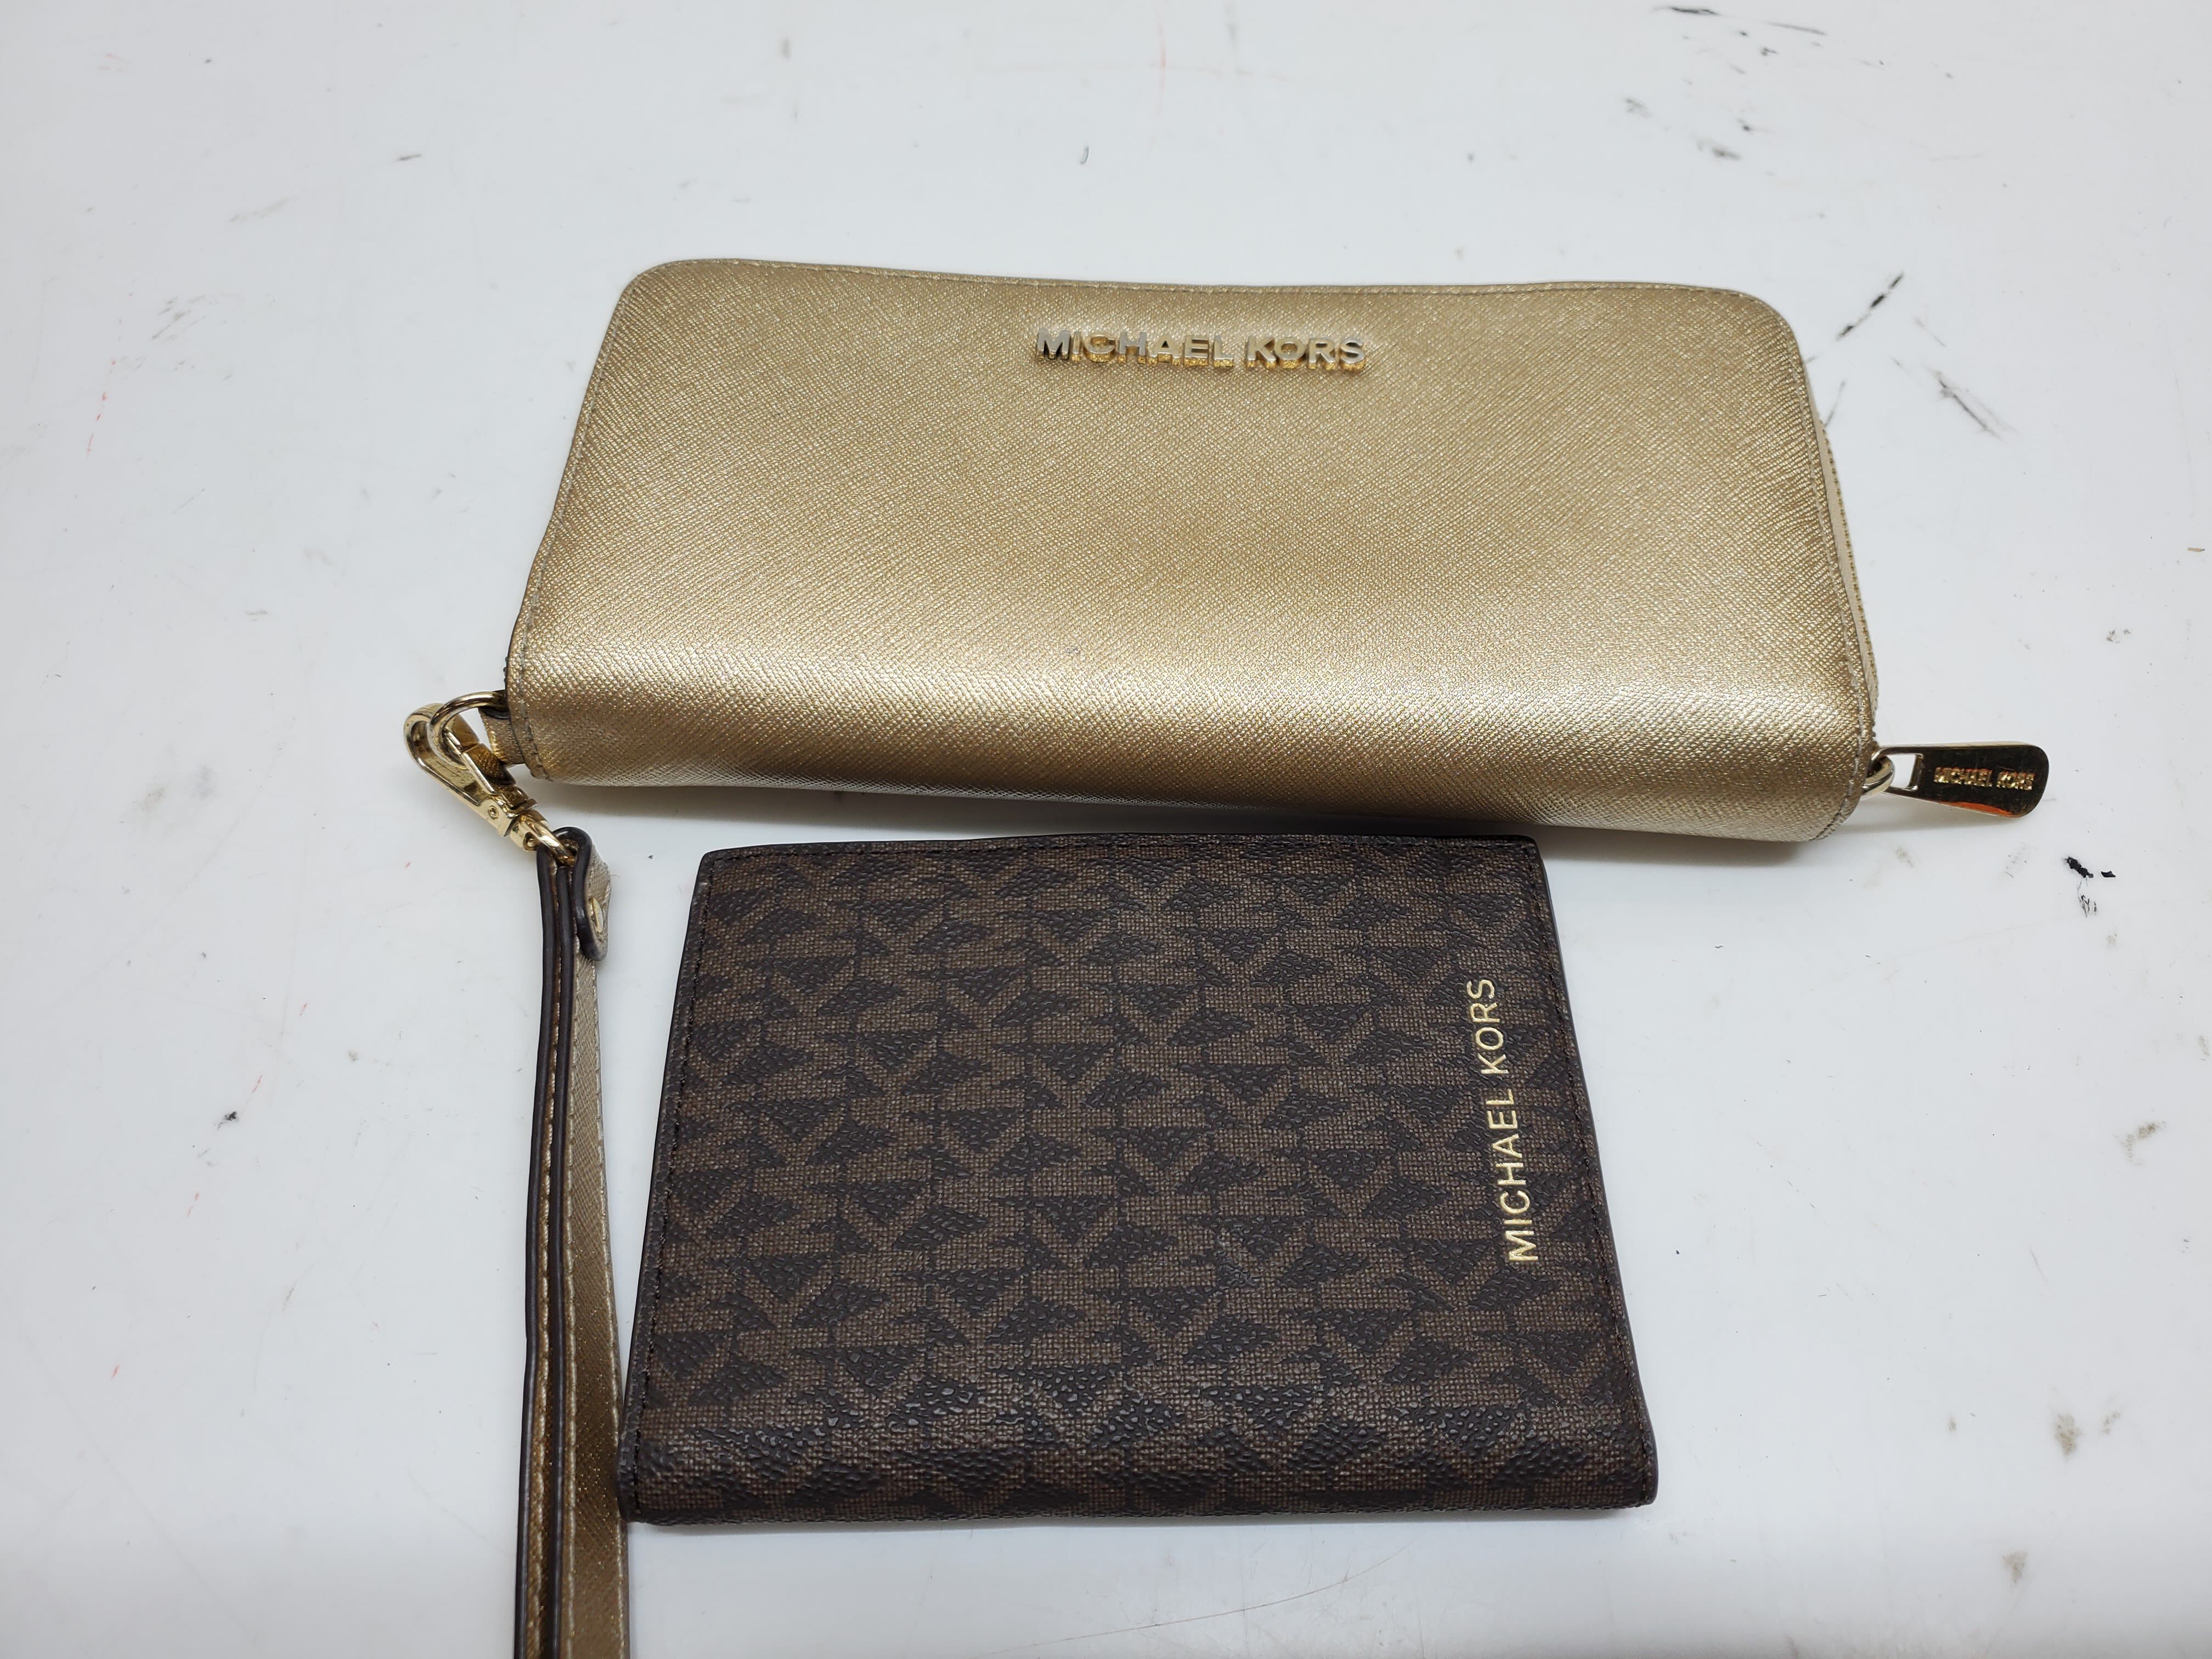 MK Michael kors rose gold tote bag purse designer signature womens handbag  used | Gold tote bag, Tote bag purse, Purses and bags